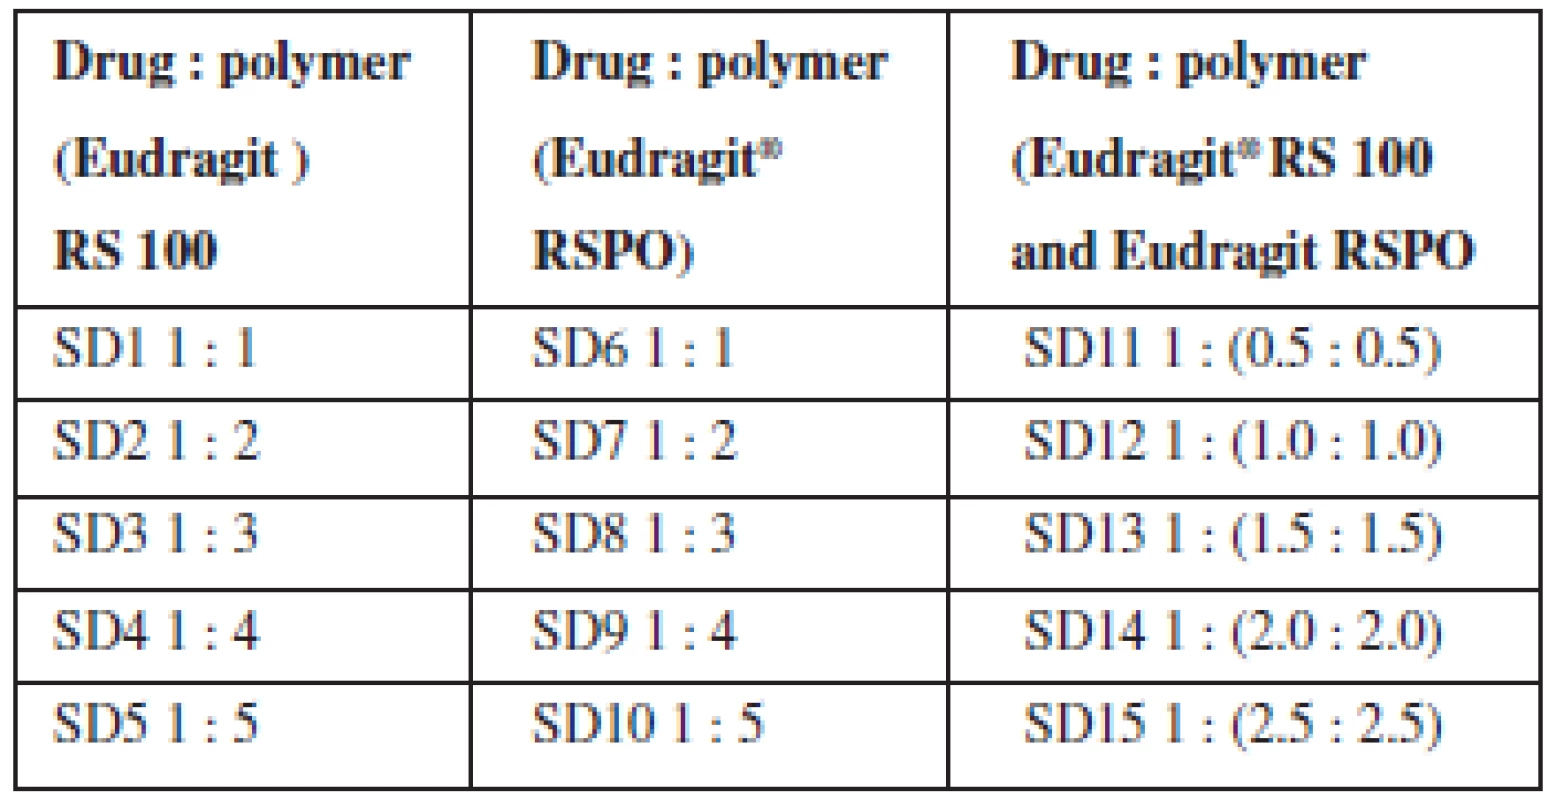 Composition of drug : polymer co-evaporates